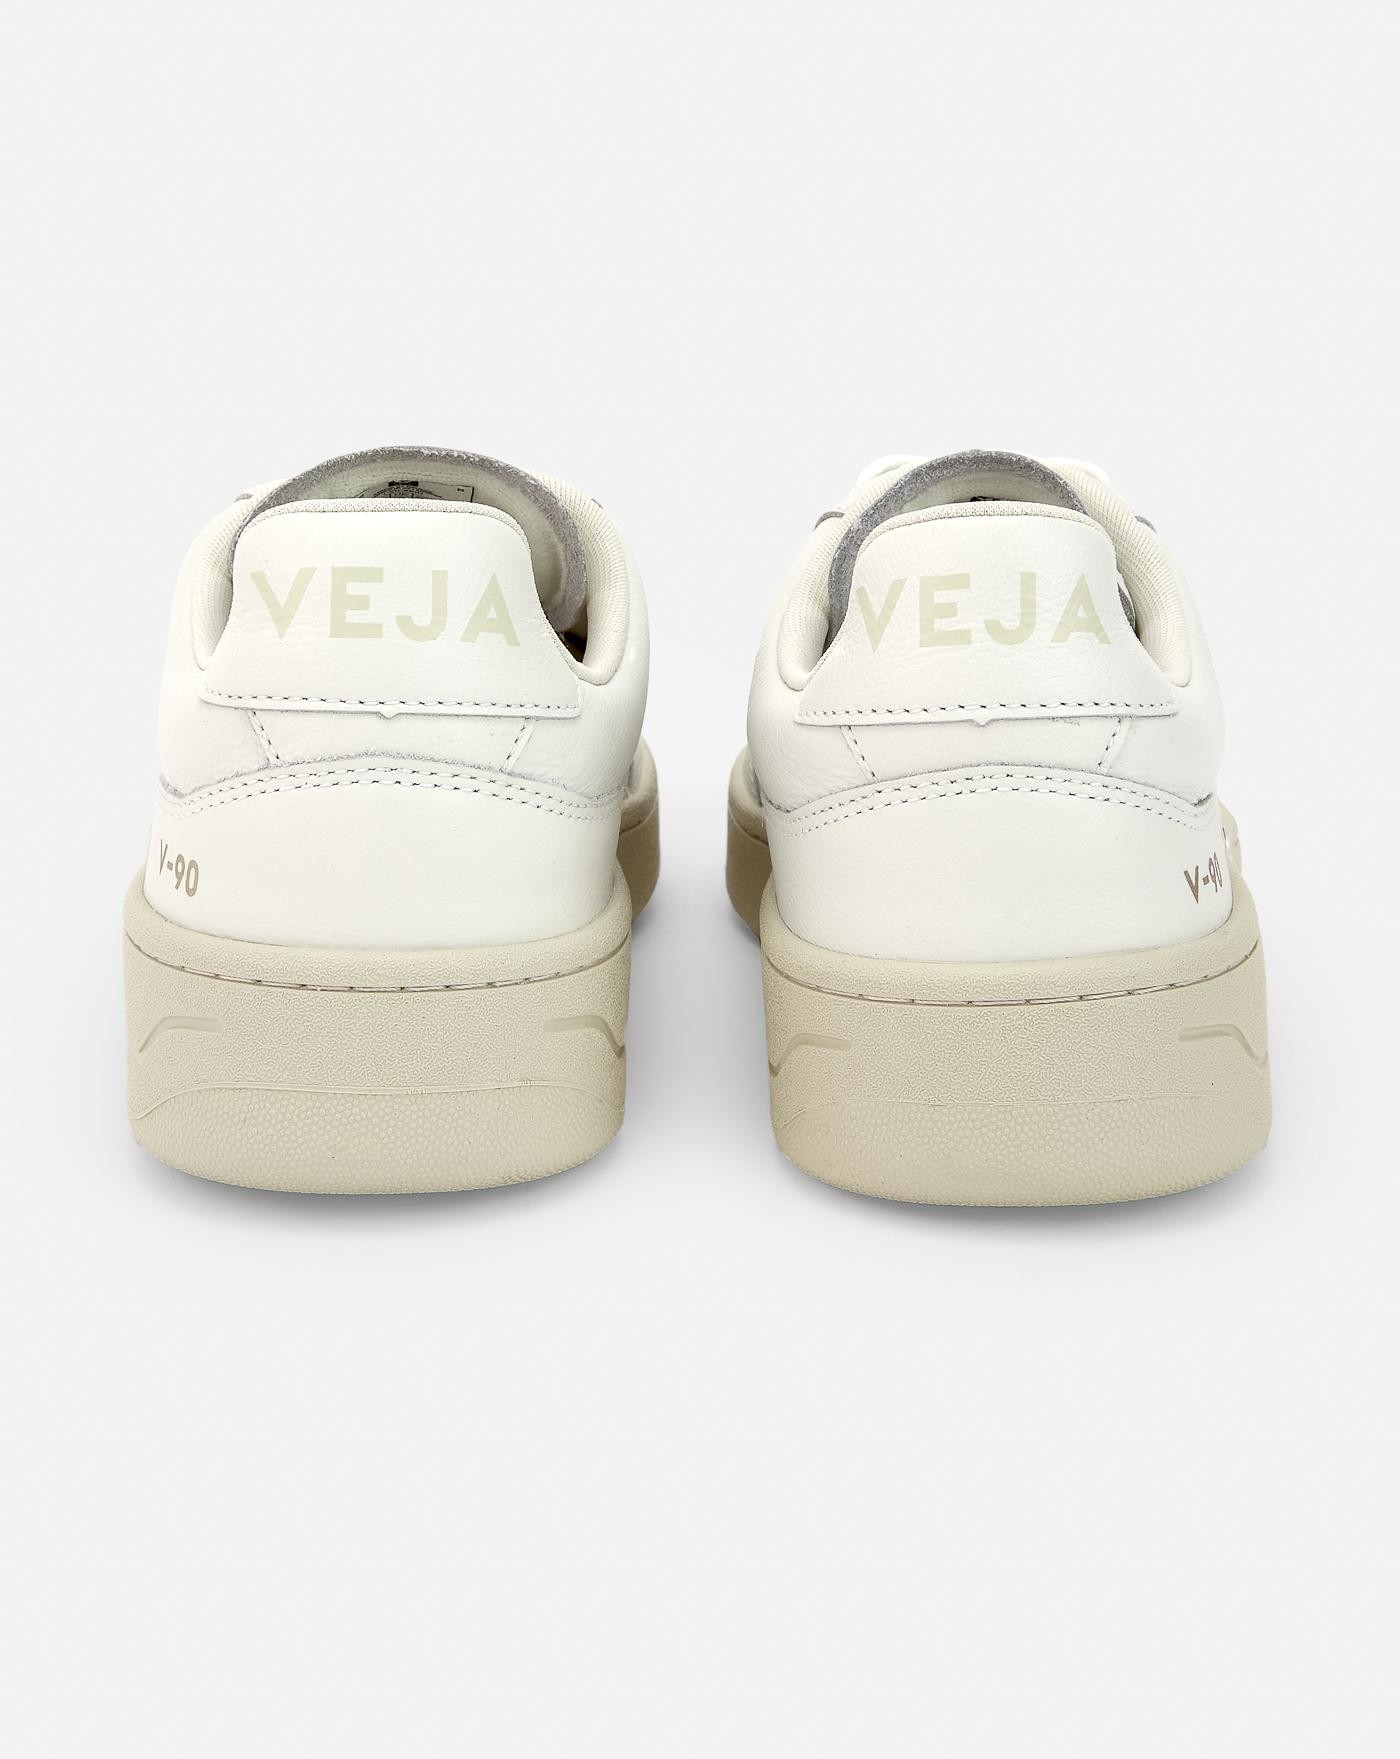 veja-zapatillas-v-90-leather-extra-white-sneakers-blancas-3